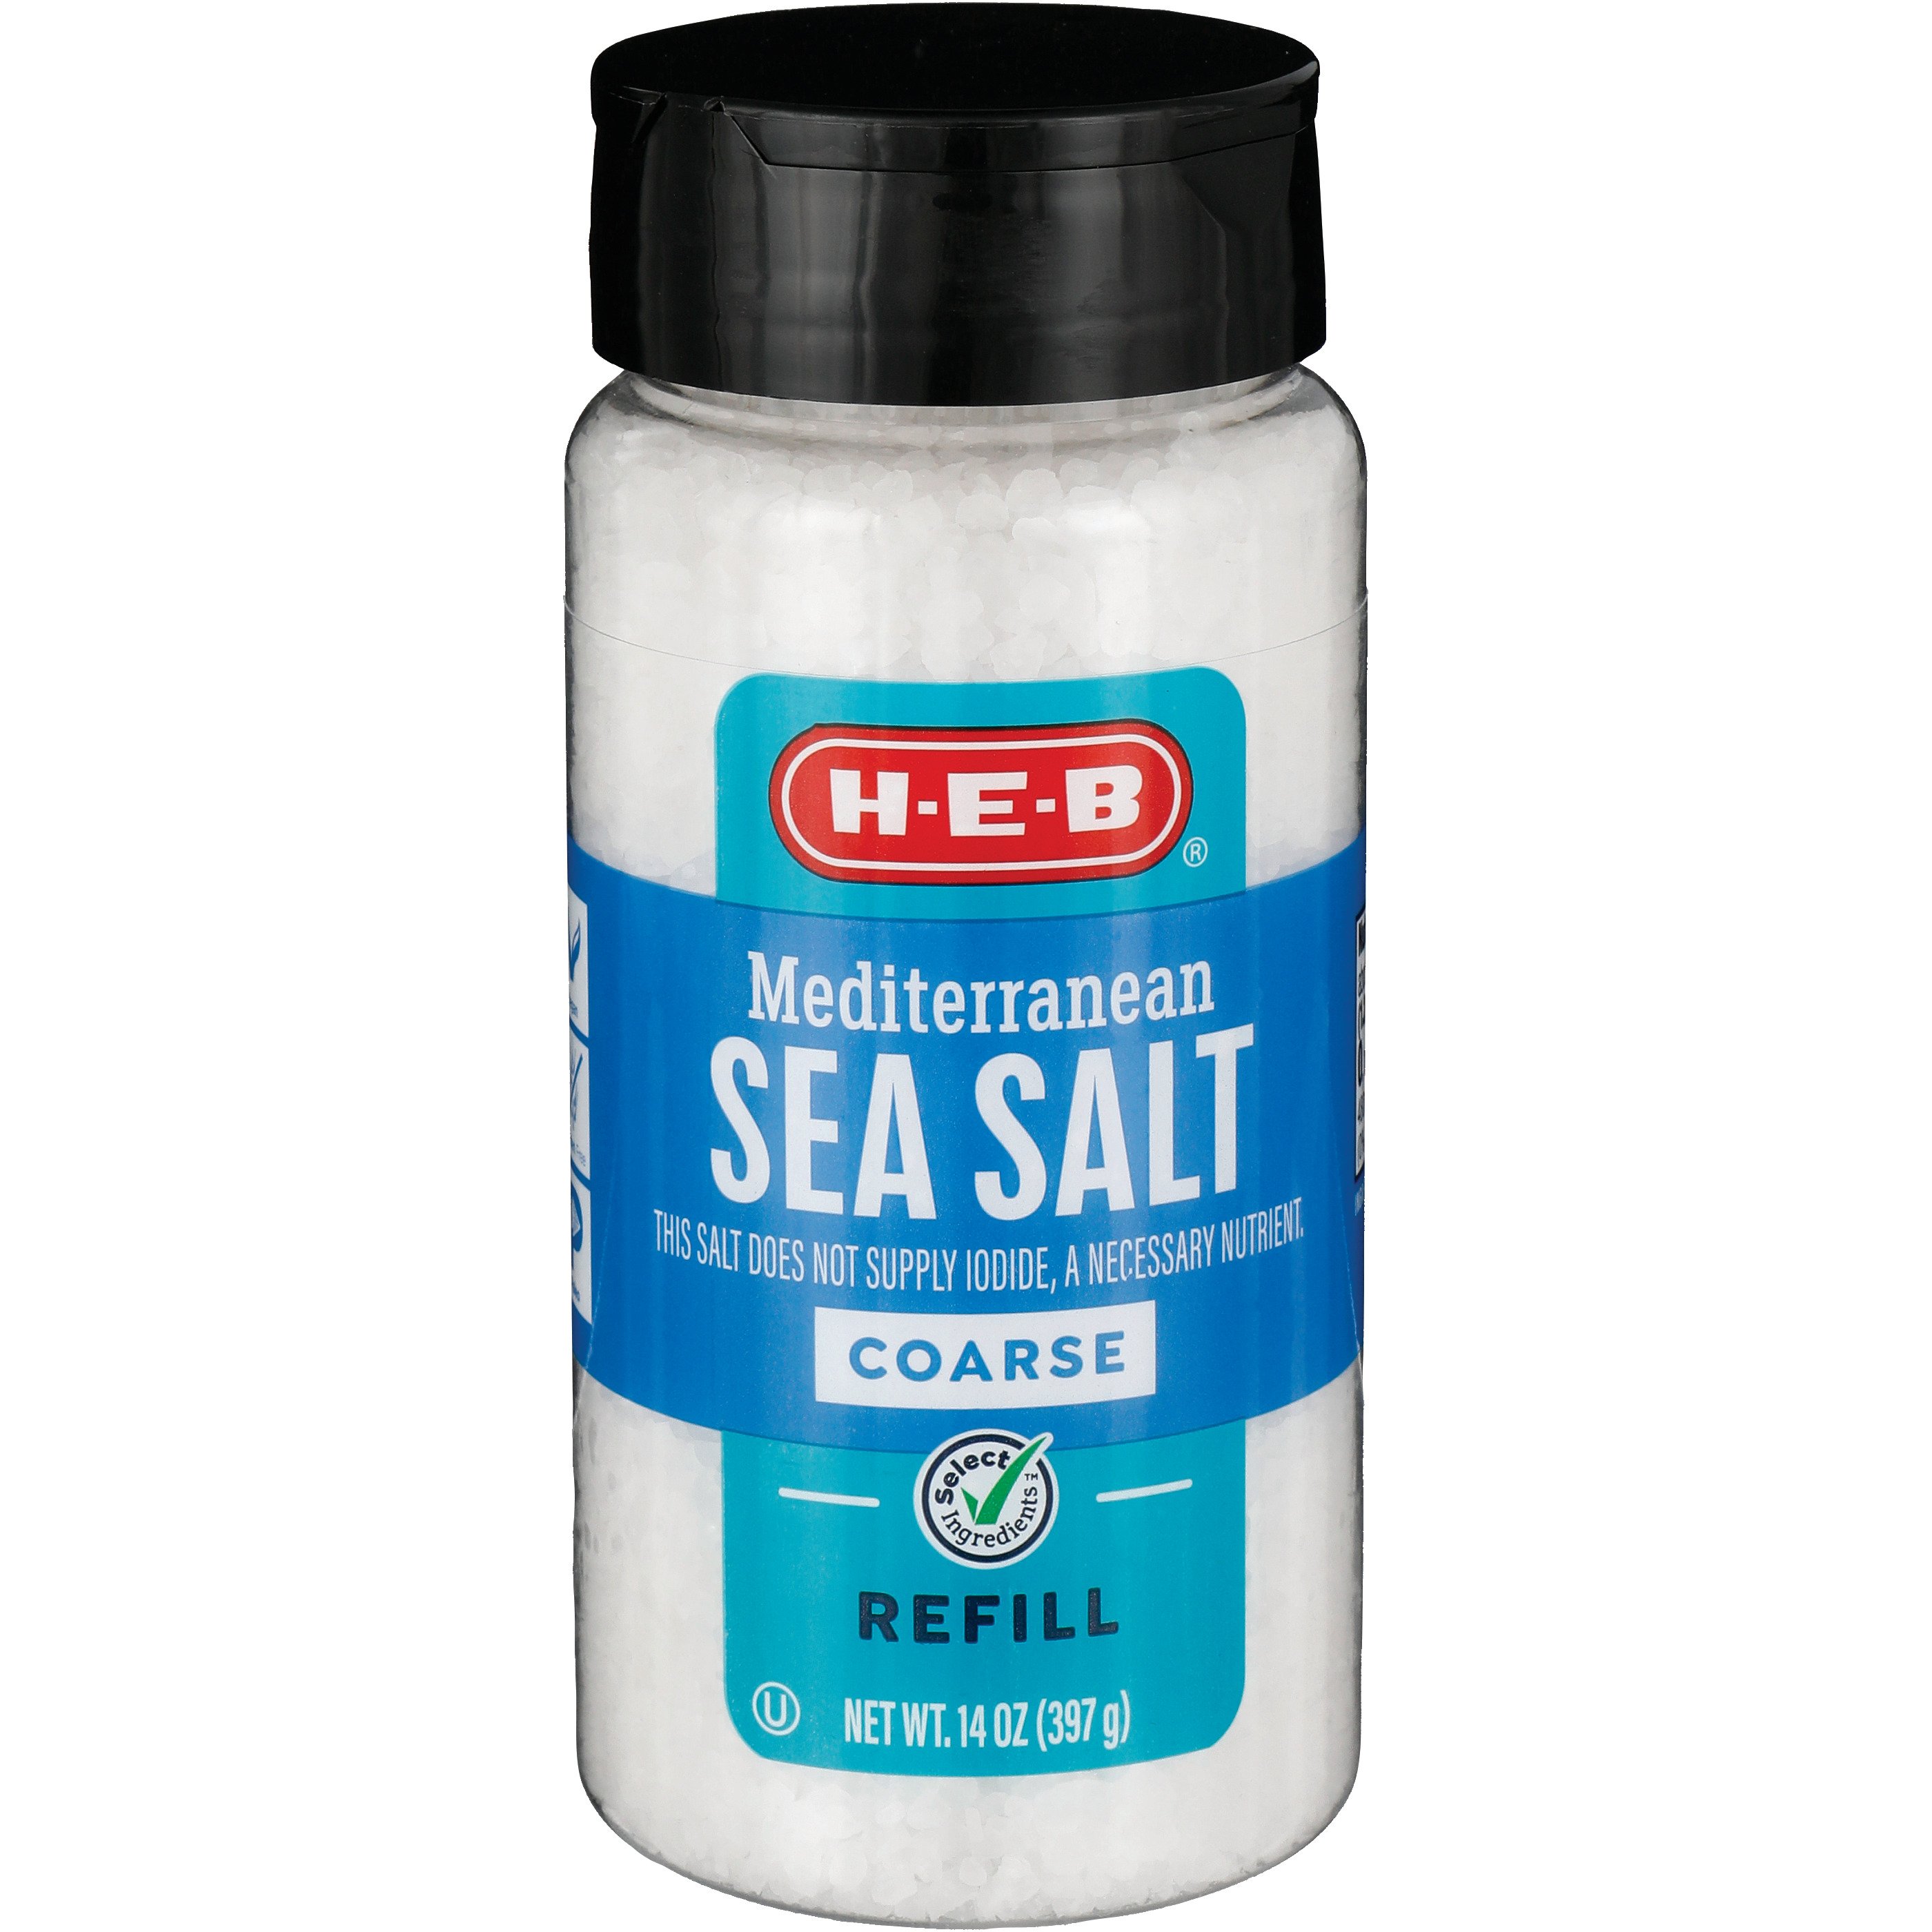 Morton Extra Coarse Sea Salt Grinder Refill 9 oz.